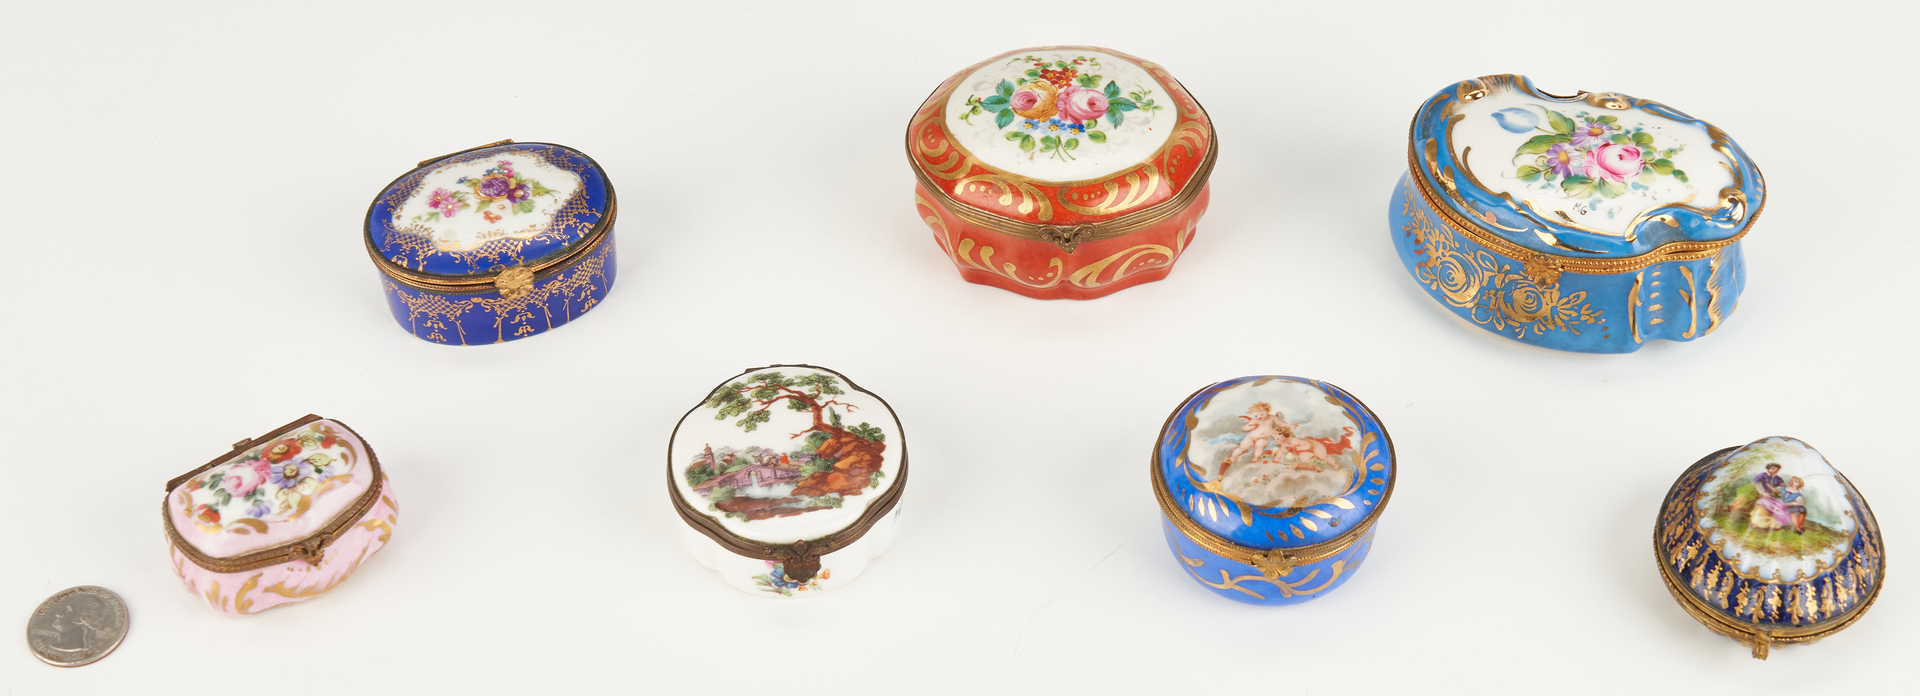 Lot 1091: 7 Assorted European Porcelain Pill or Trinket Boxes